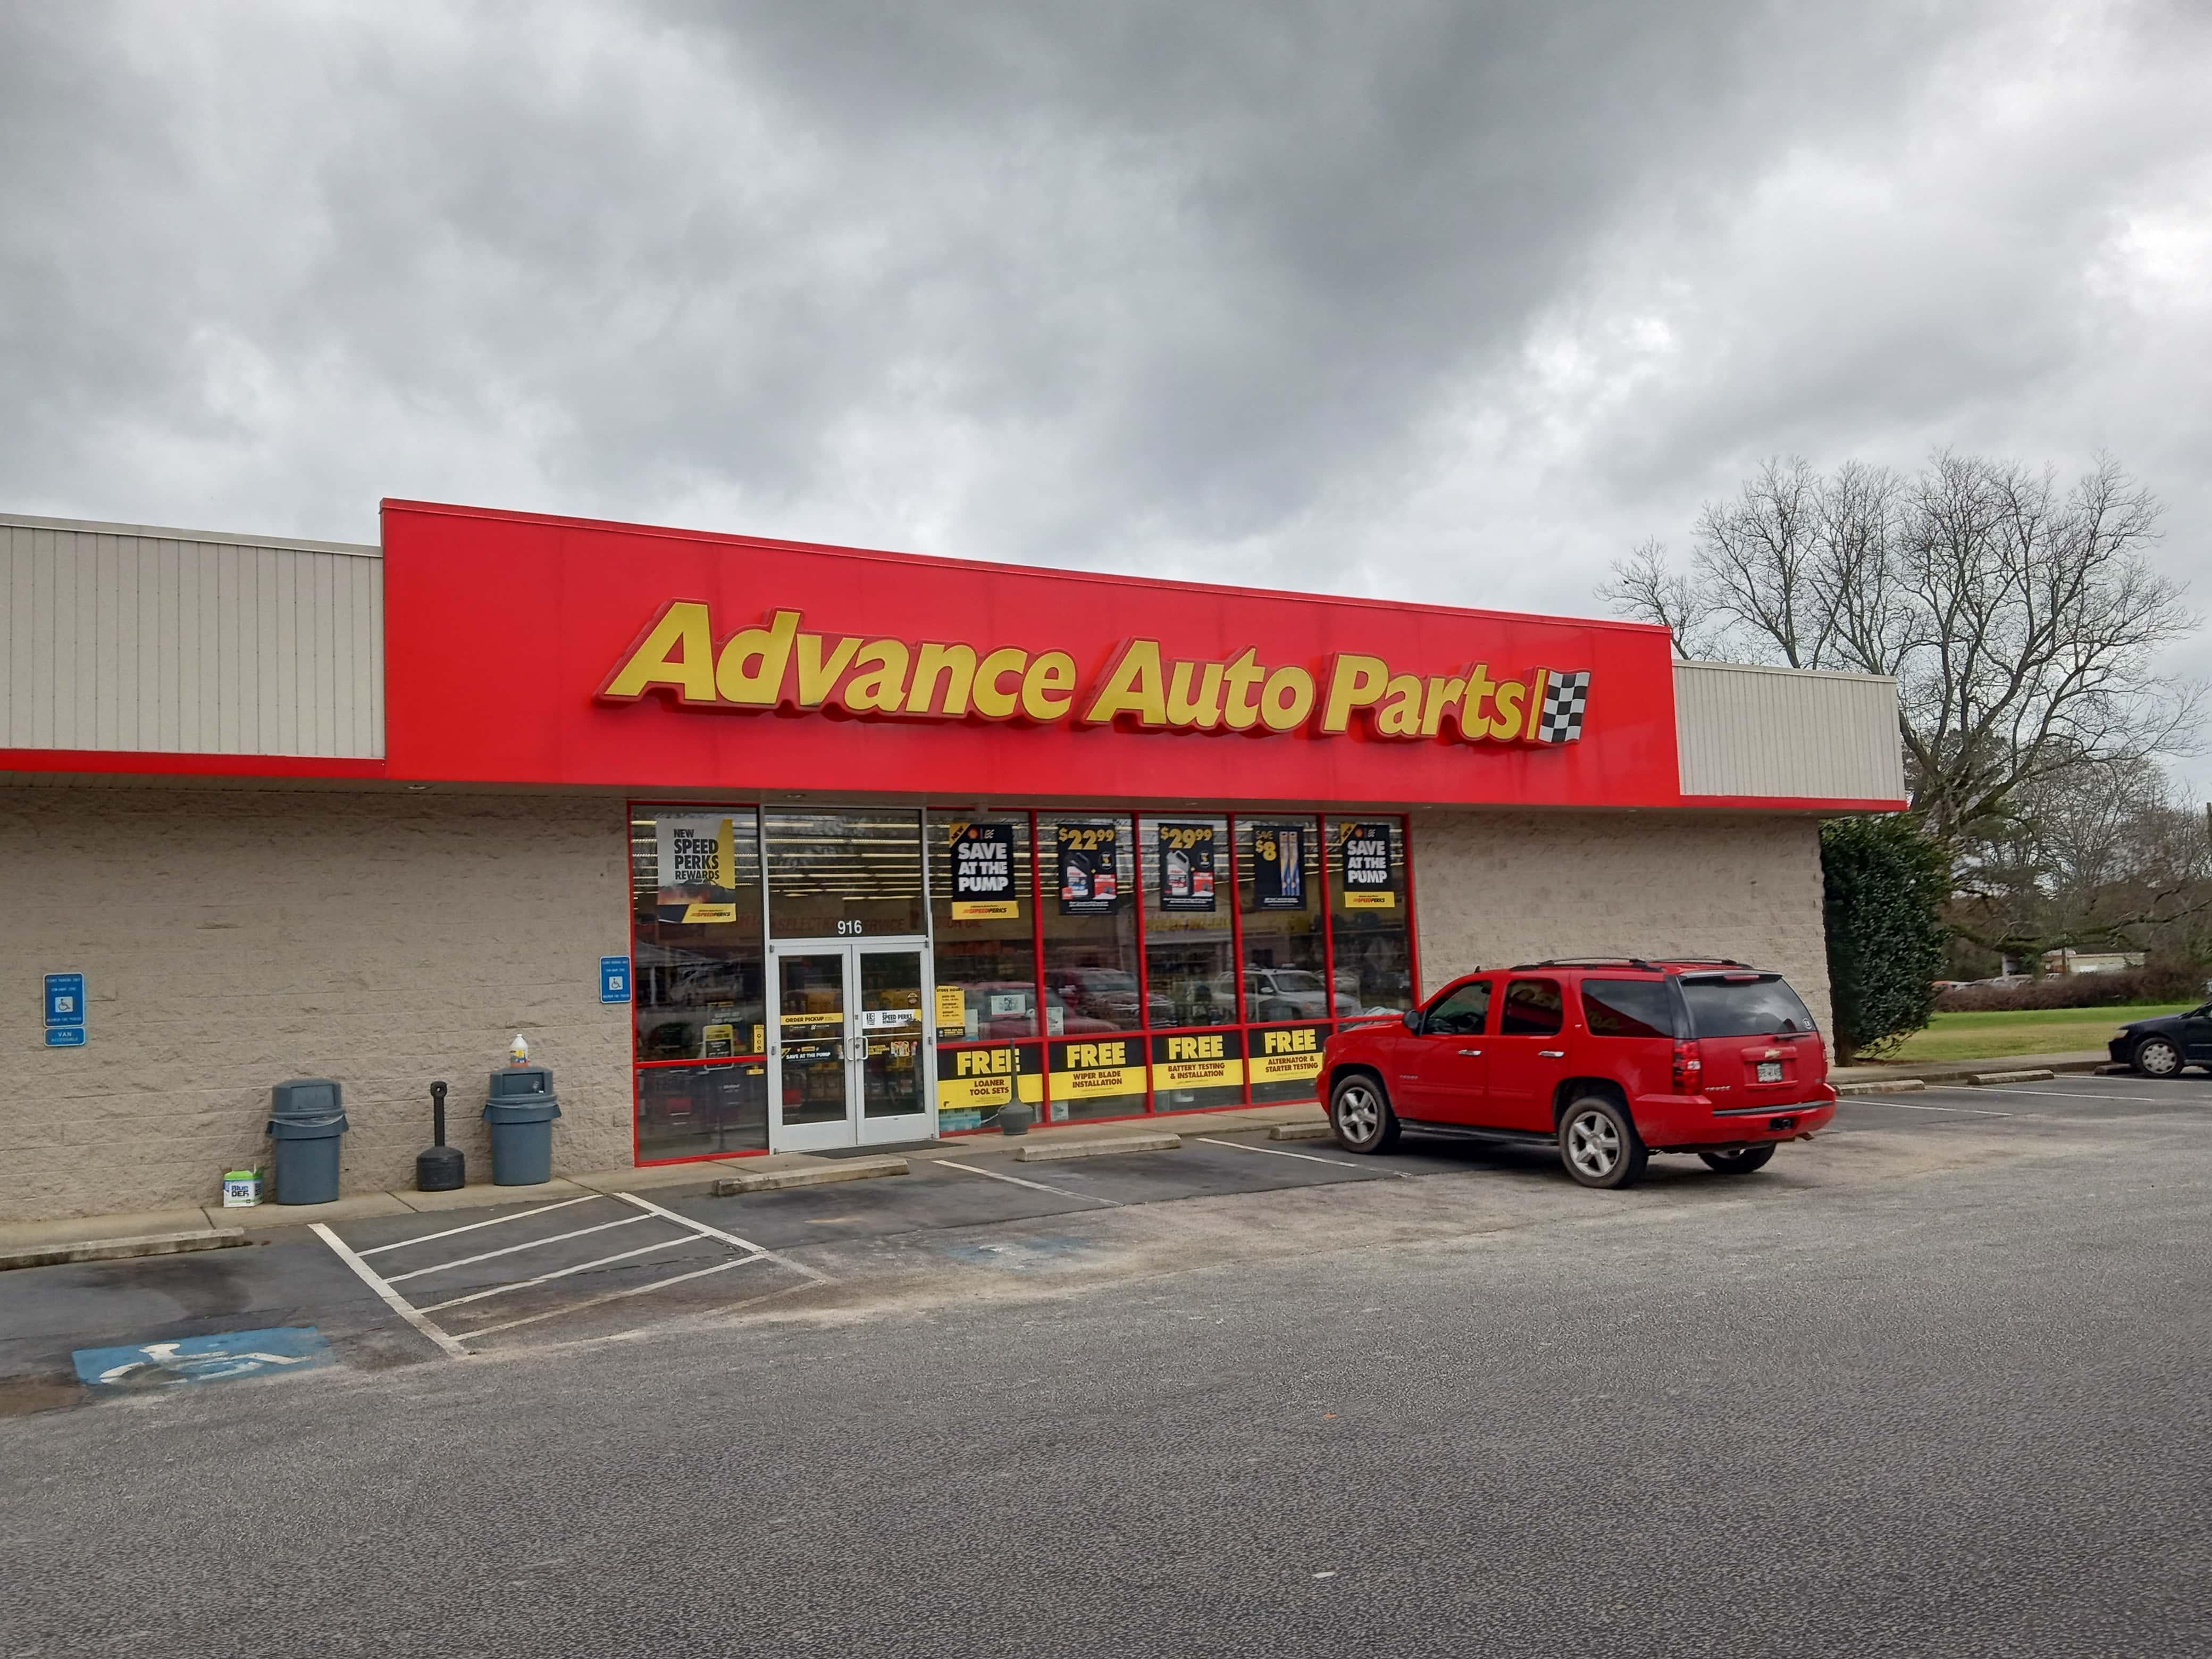 Advance Auto Parts - Washington (GA 30673), US, auto supply store near me